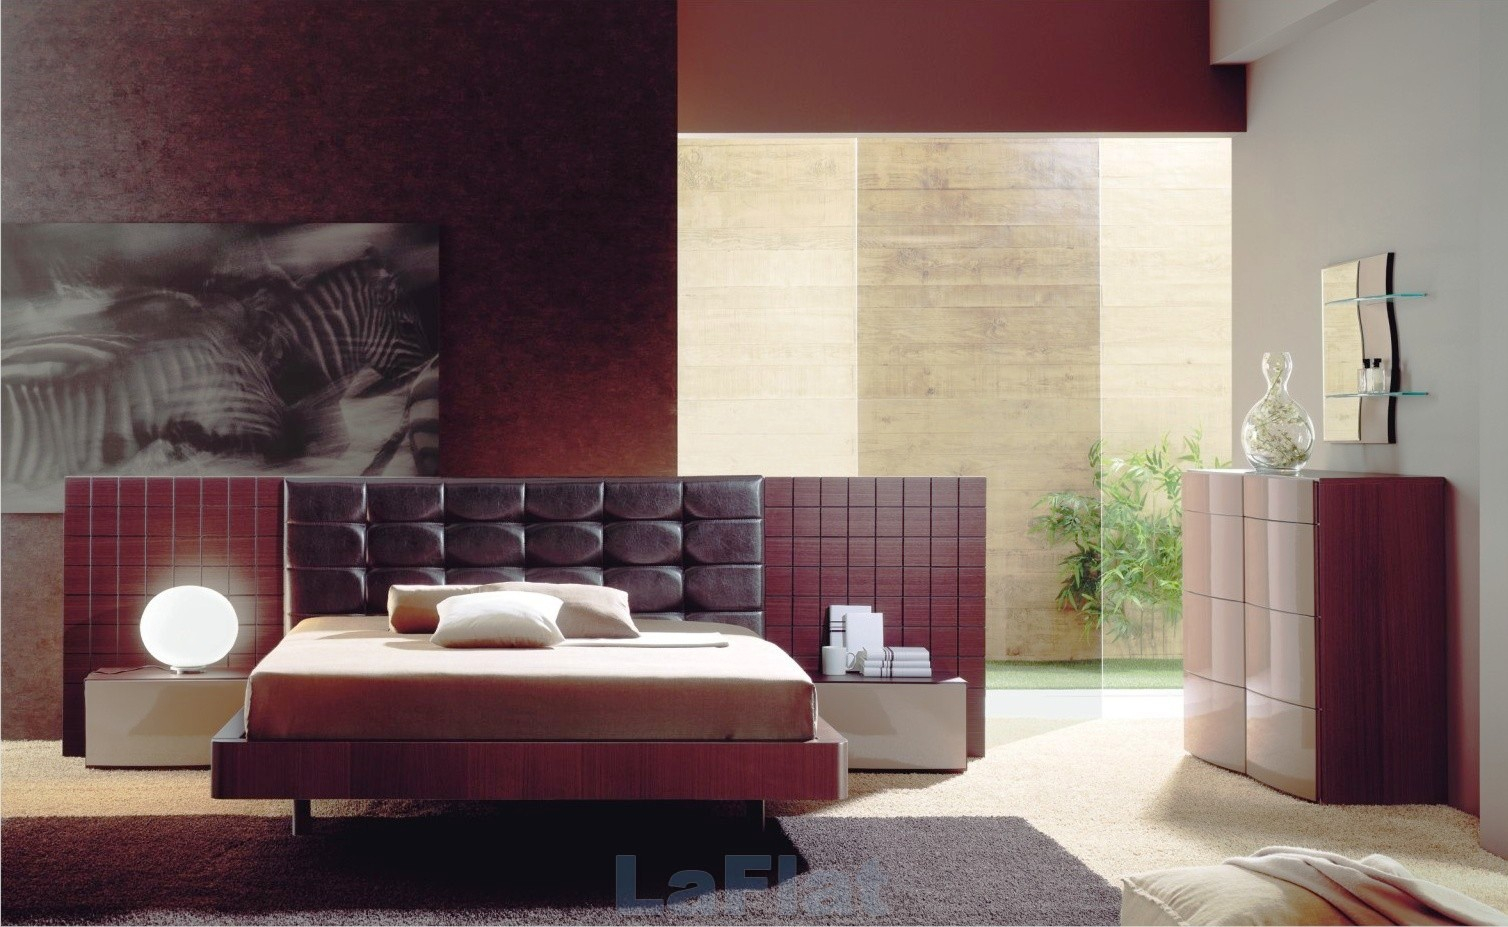 Stylist Design Bedroom Paint Colors Feng Shui Safari regarding sizing 1508 X 927